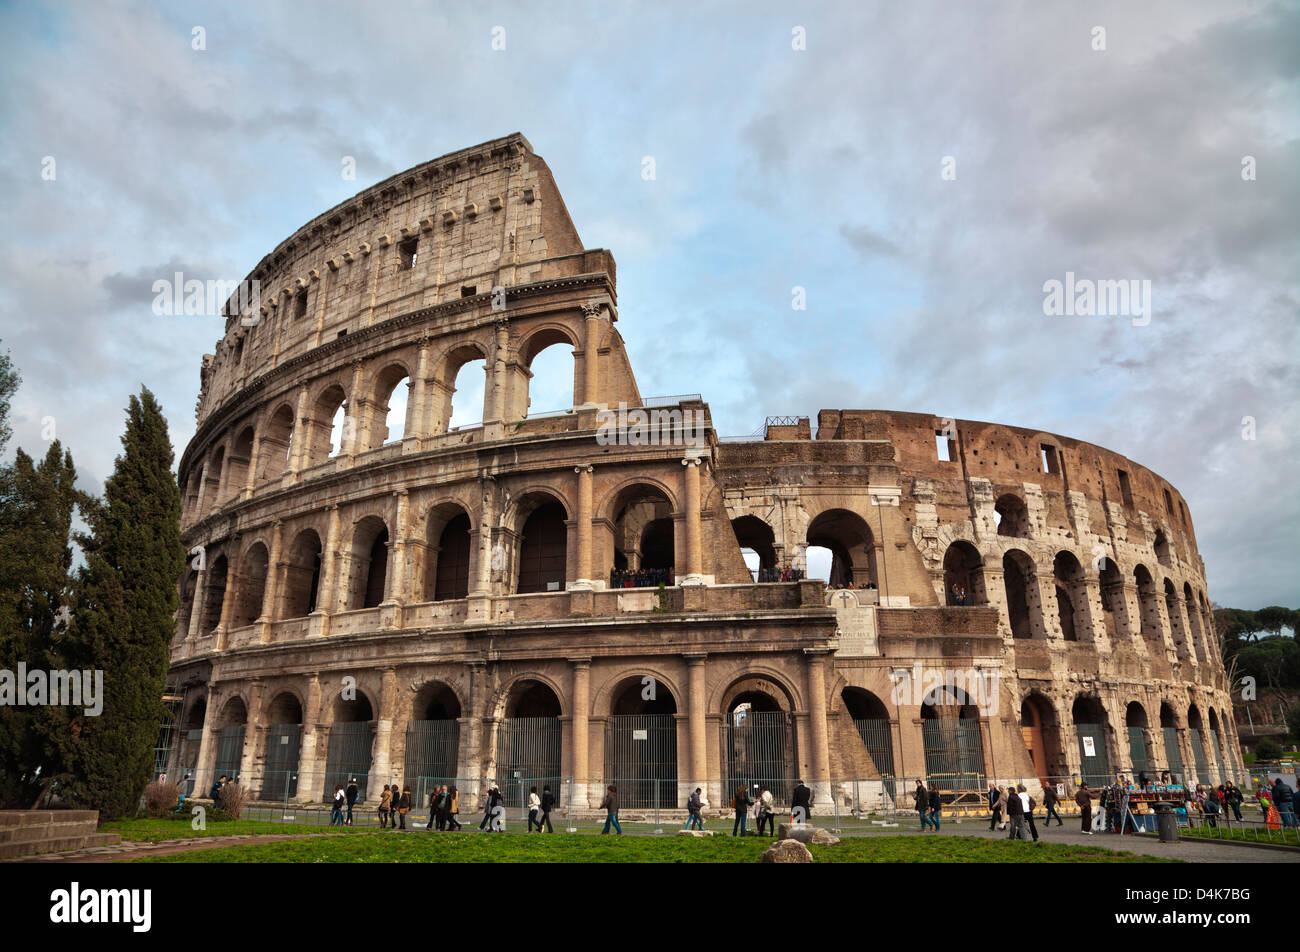 El Coliseo de Roma, Italia Foto de stock